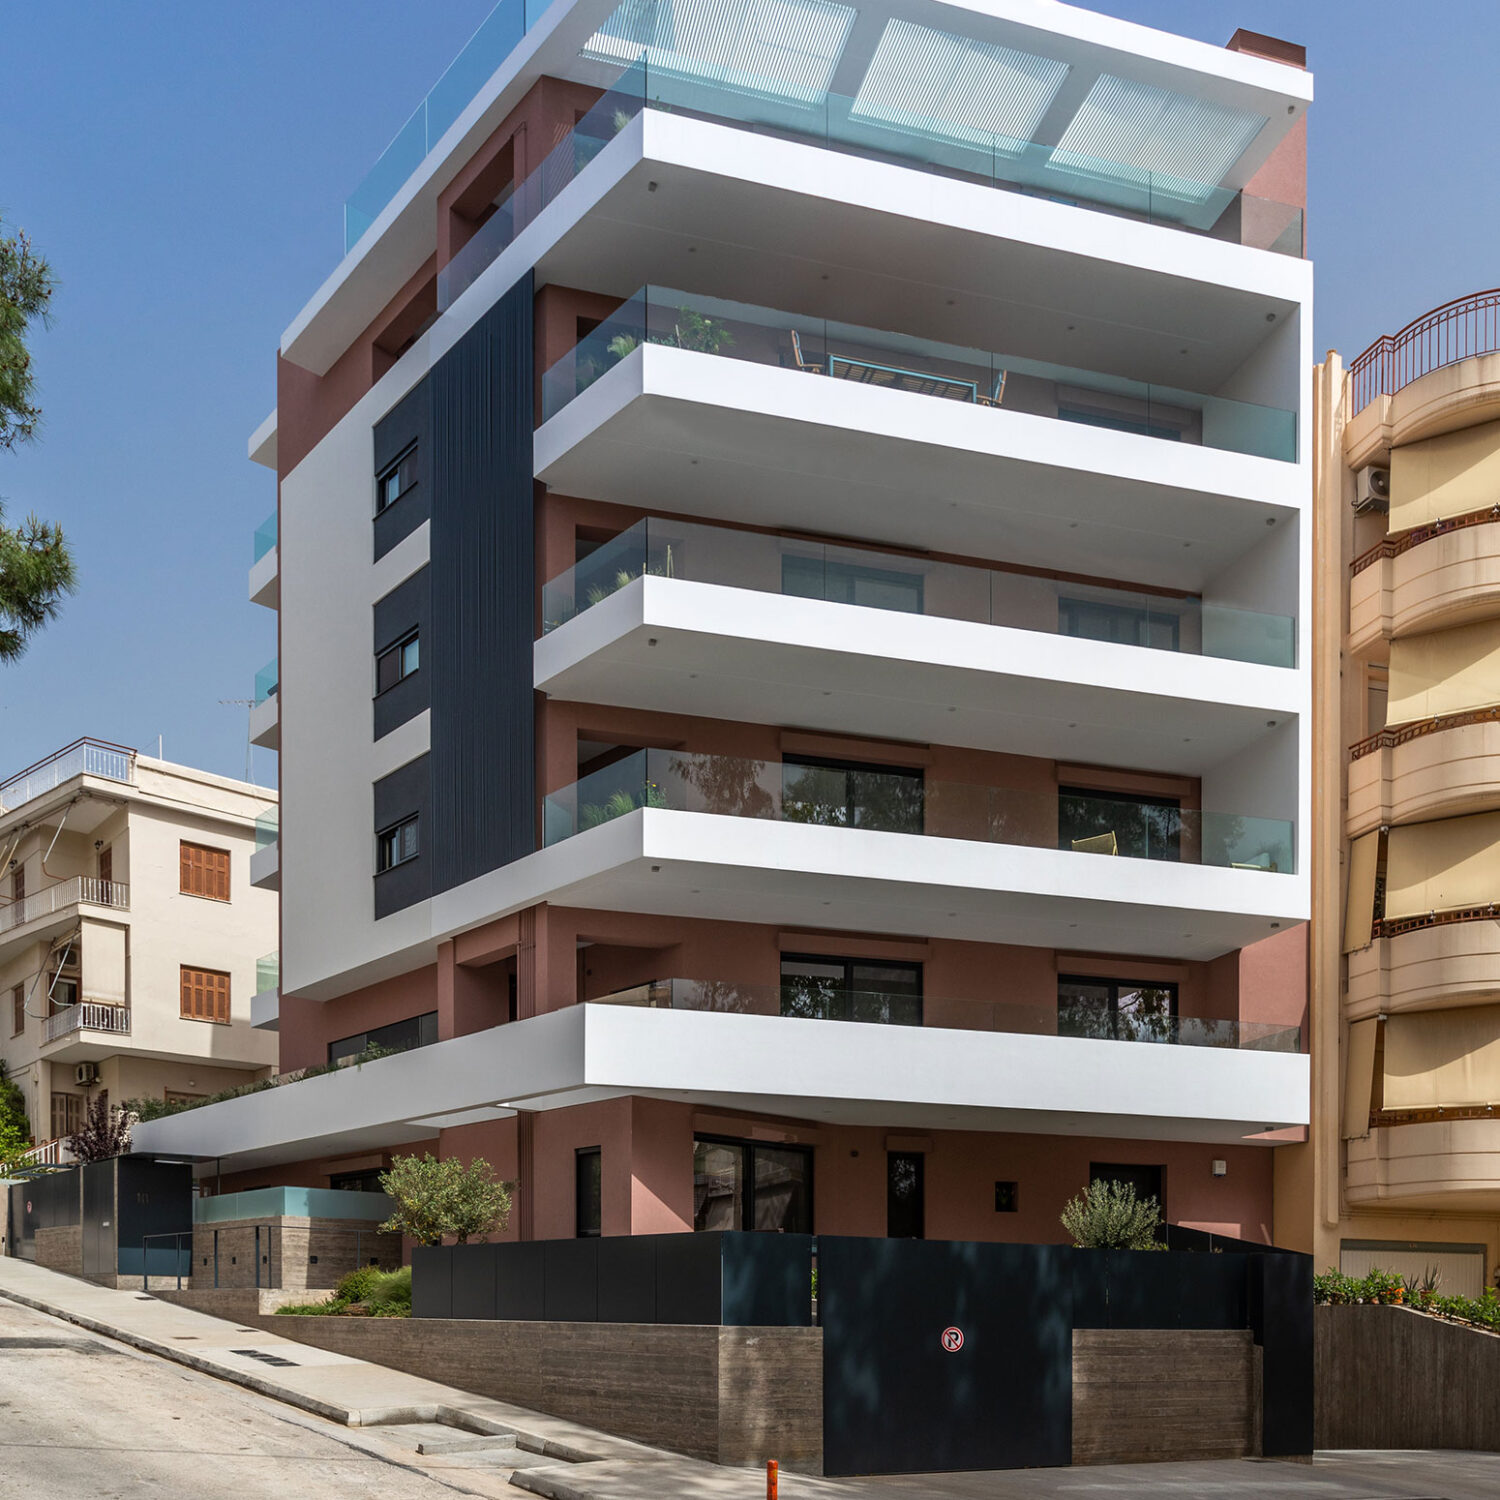 Alimos 4 apartment building by Axiacon